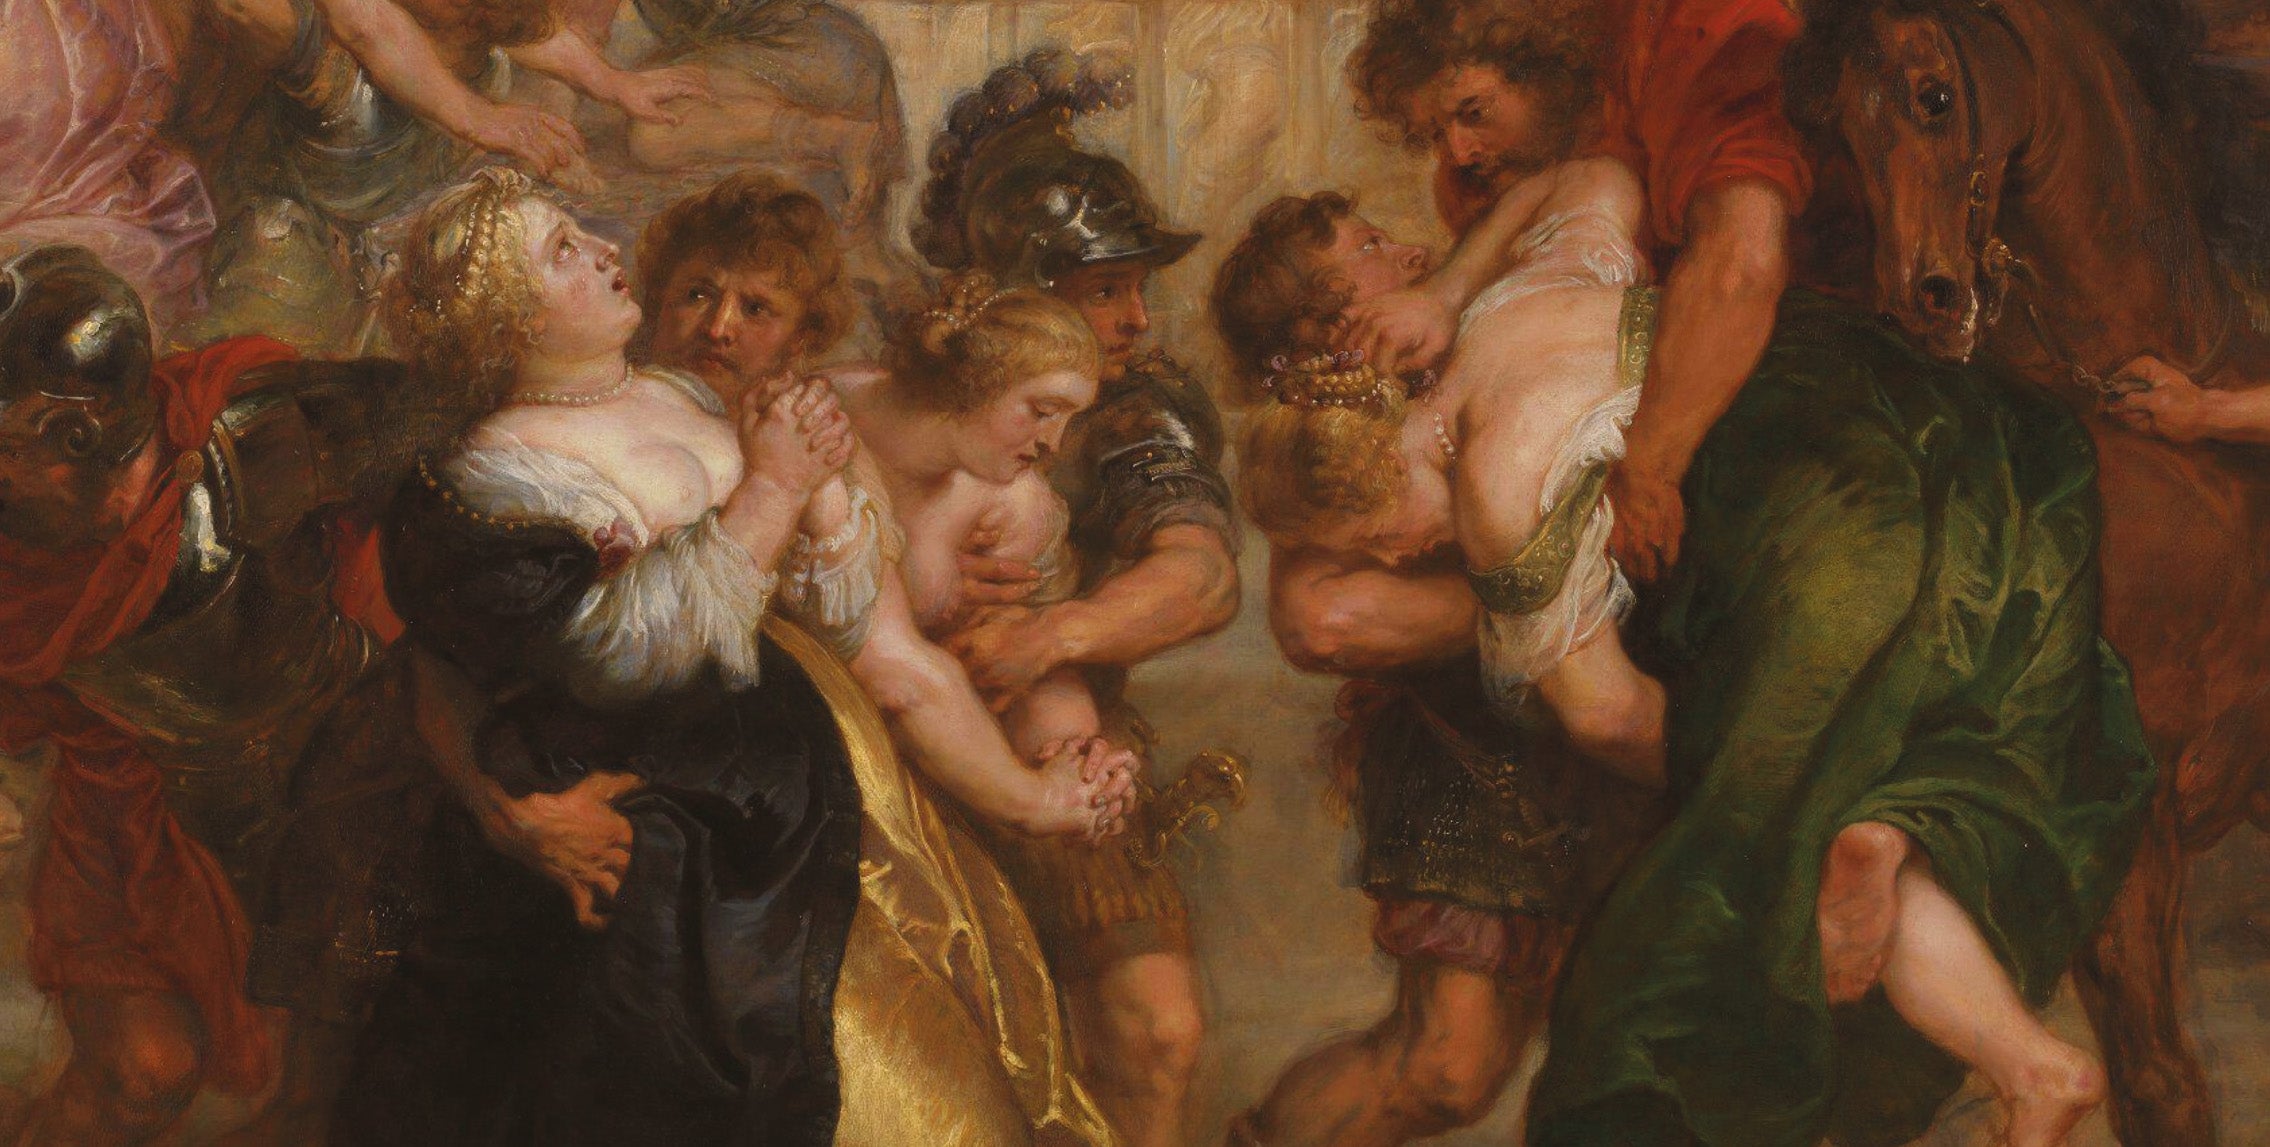 The Rape of the Sabine Women (detail), Peter Paul Rubens, oil on oak, c.1635, The National Gallery